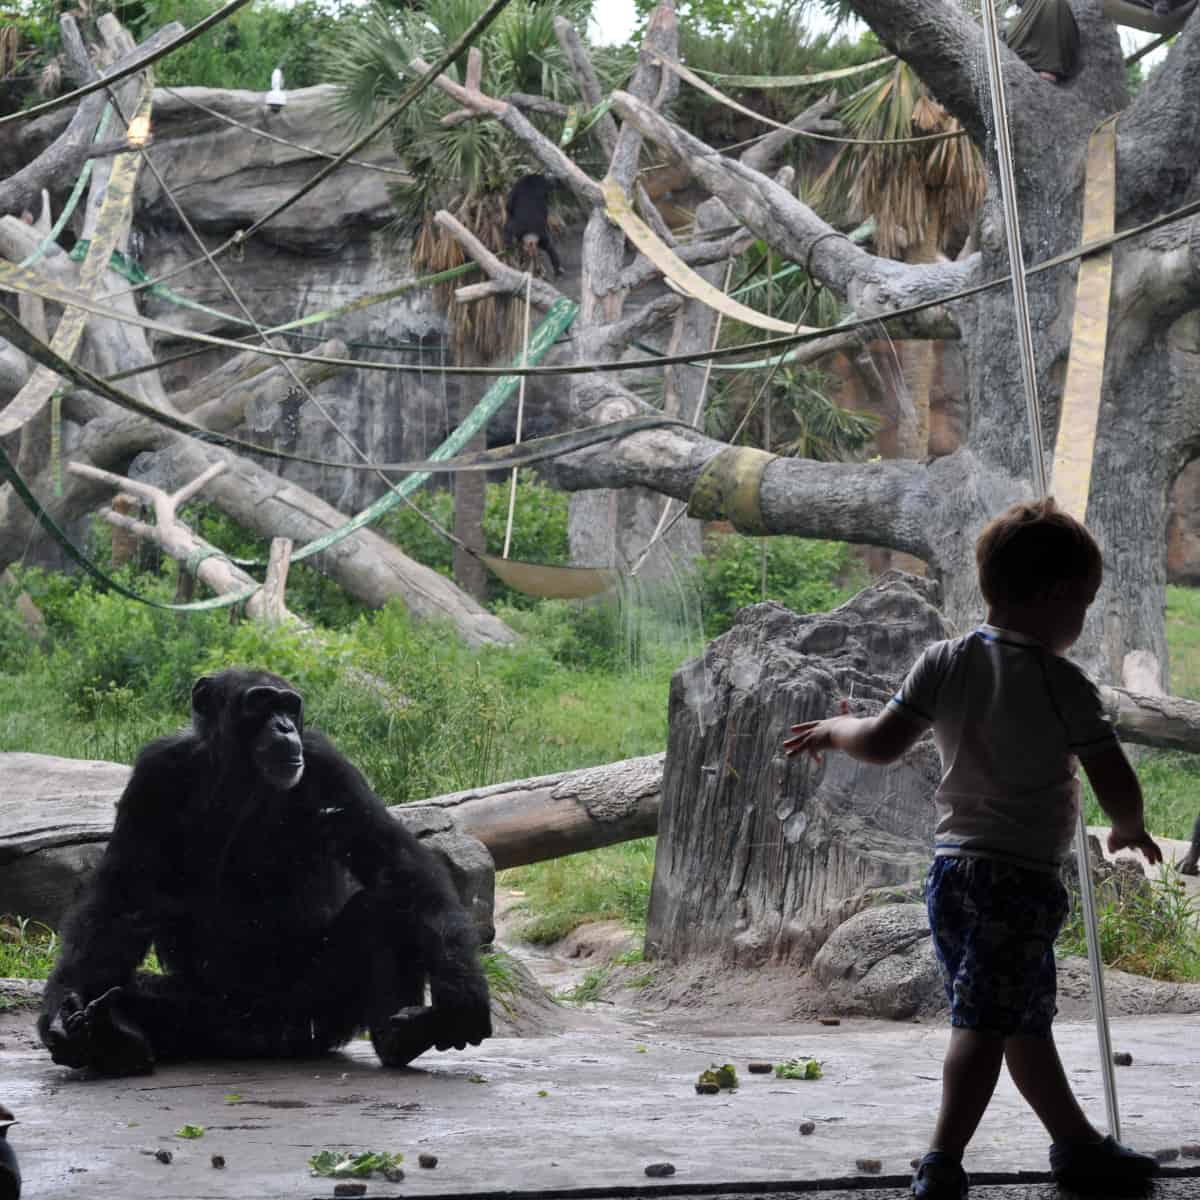 Boy at Houston Zoo Exhibit